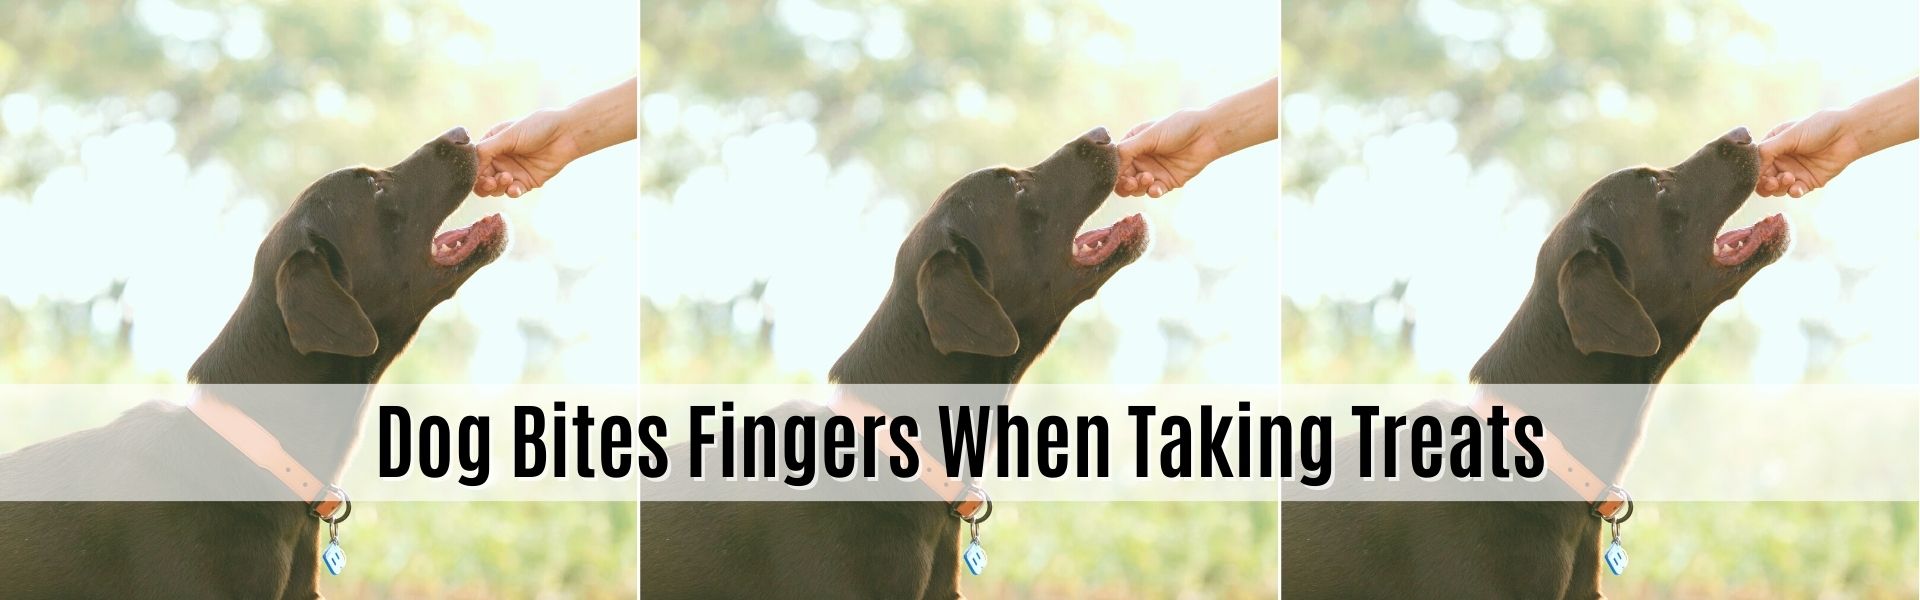 Dog Bites Fingers When Taking Treats